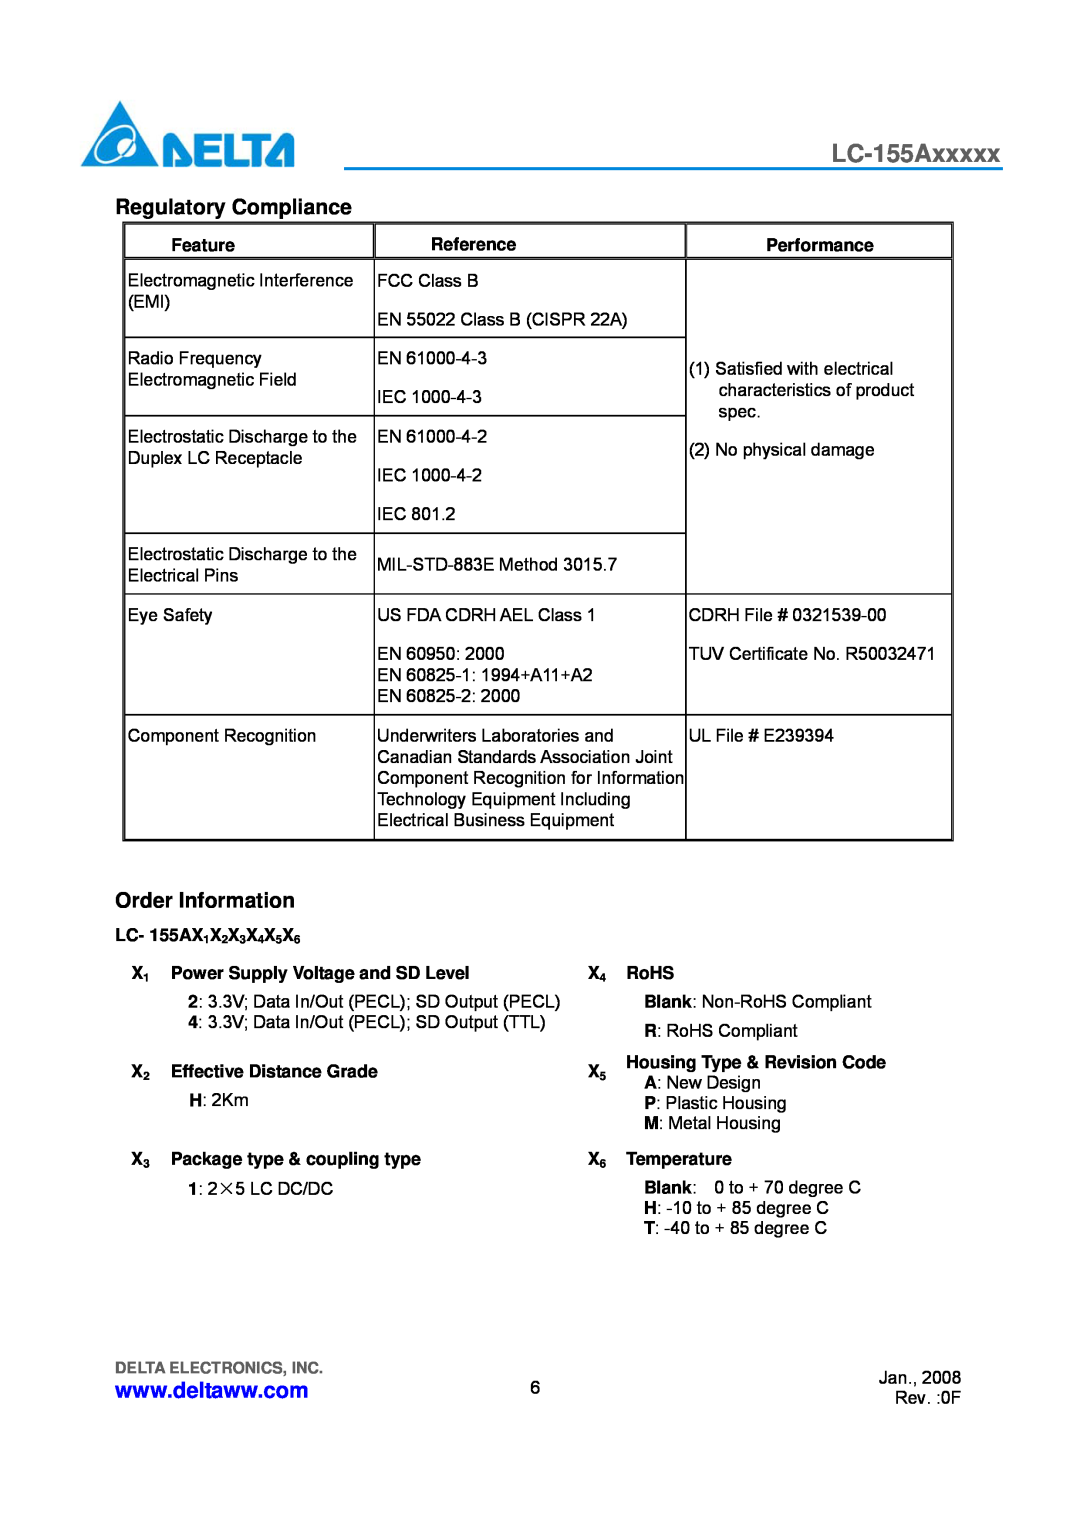 Delta Electronics LC-155Axxxxx manual Regulatory Compliance, Order Information 